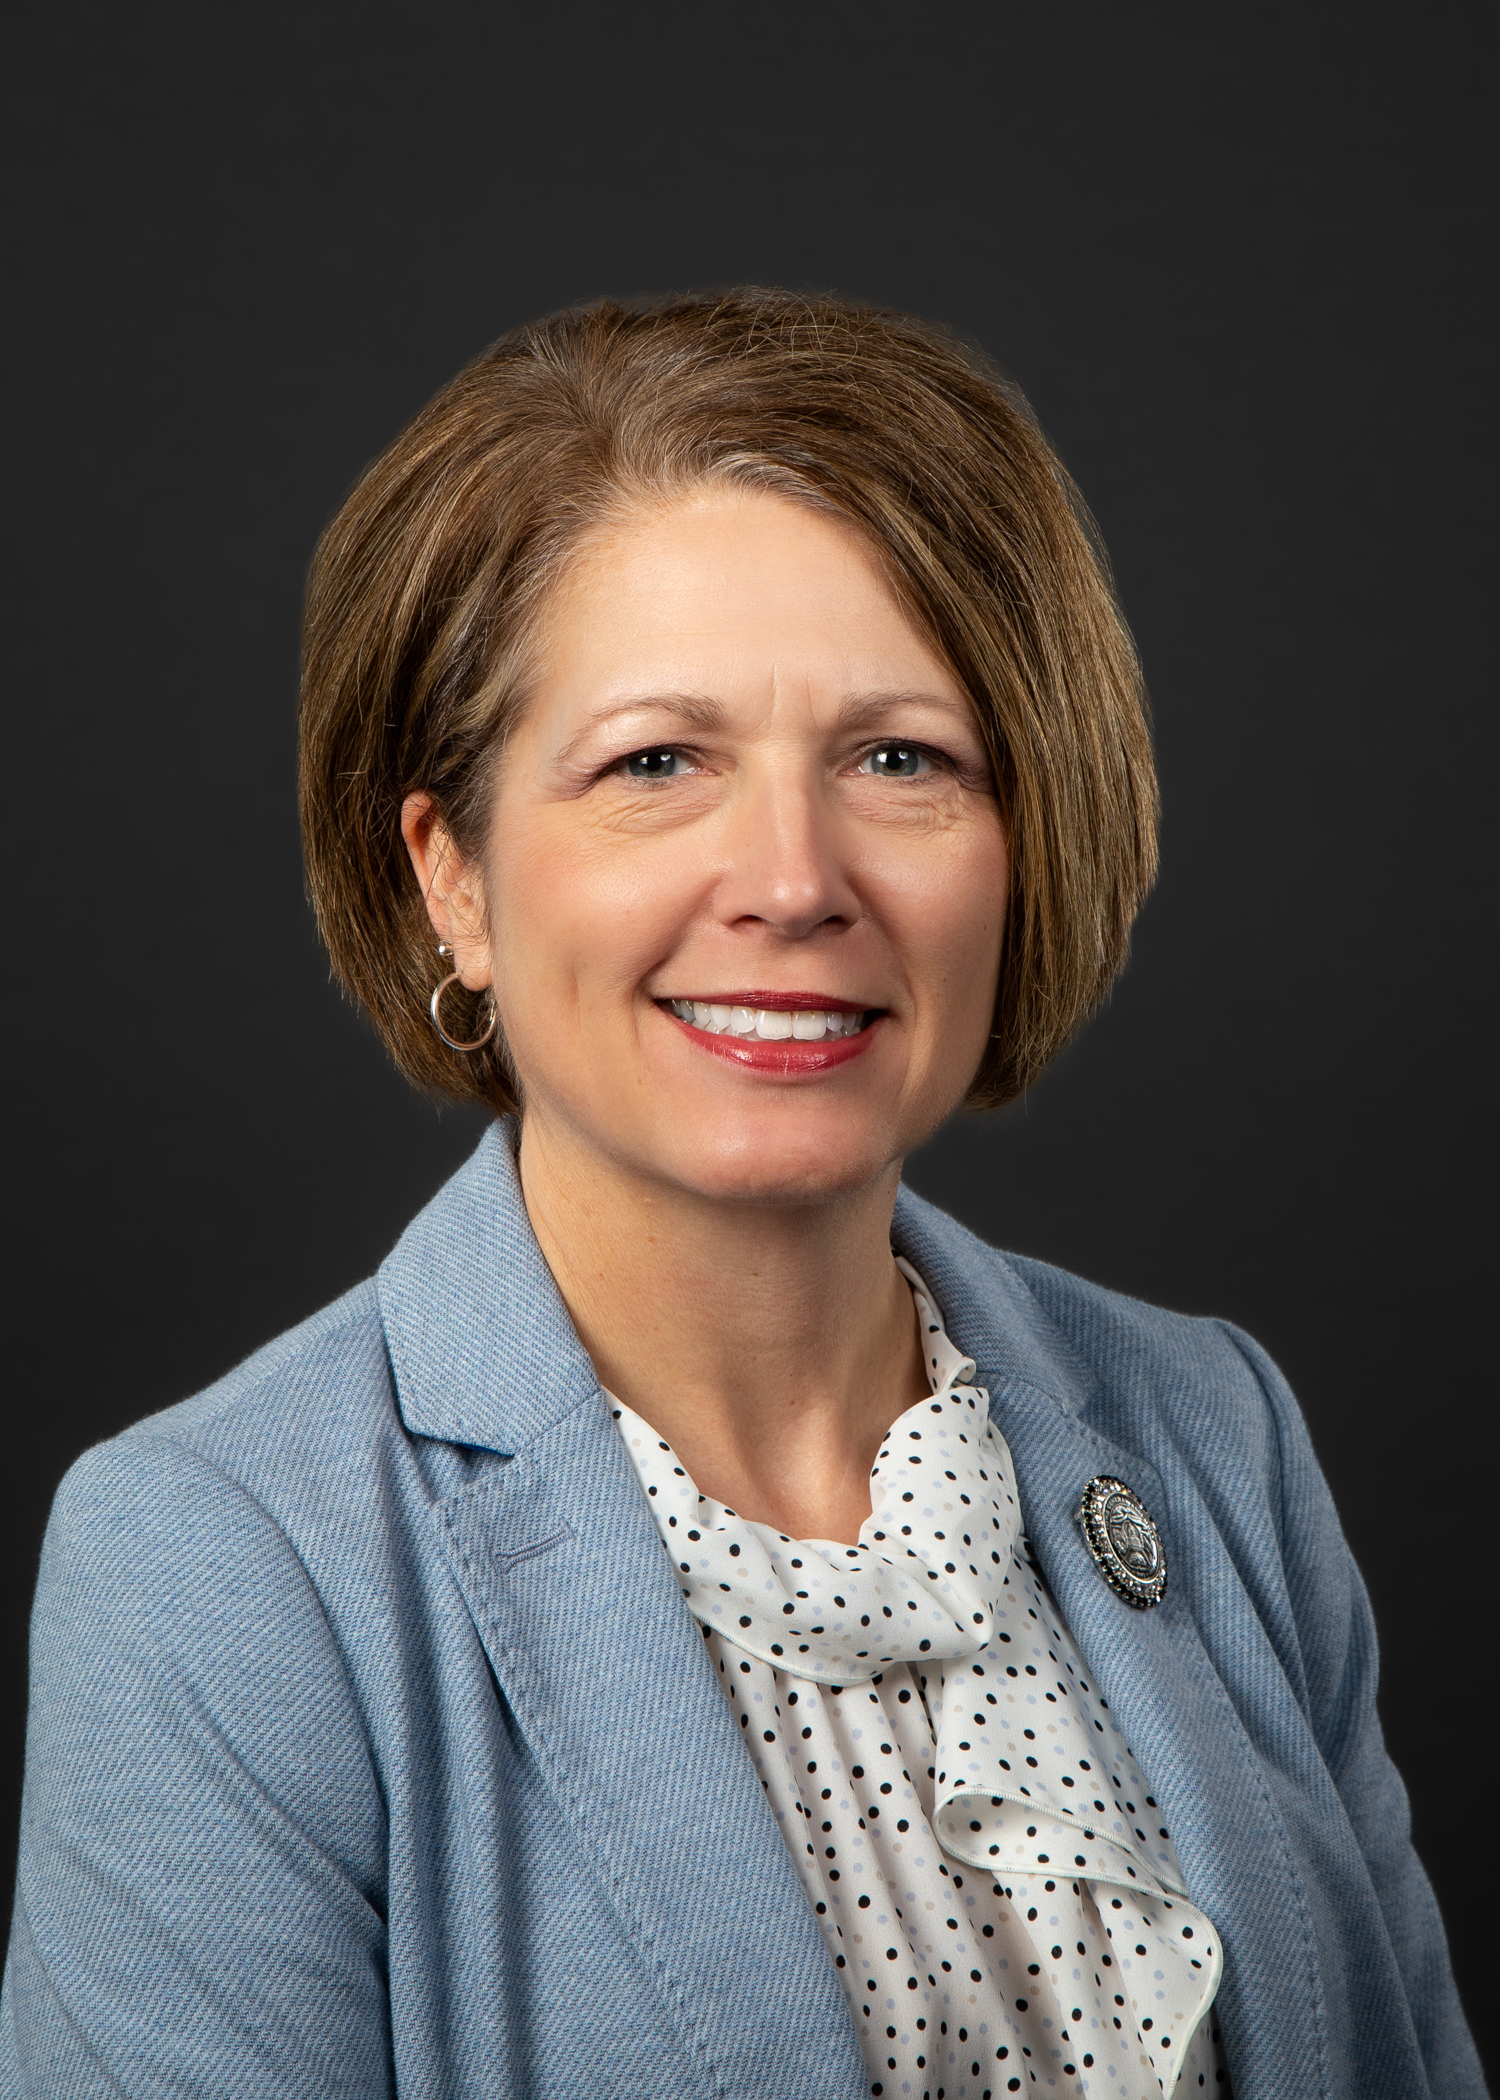  senator Shannon Latham